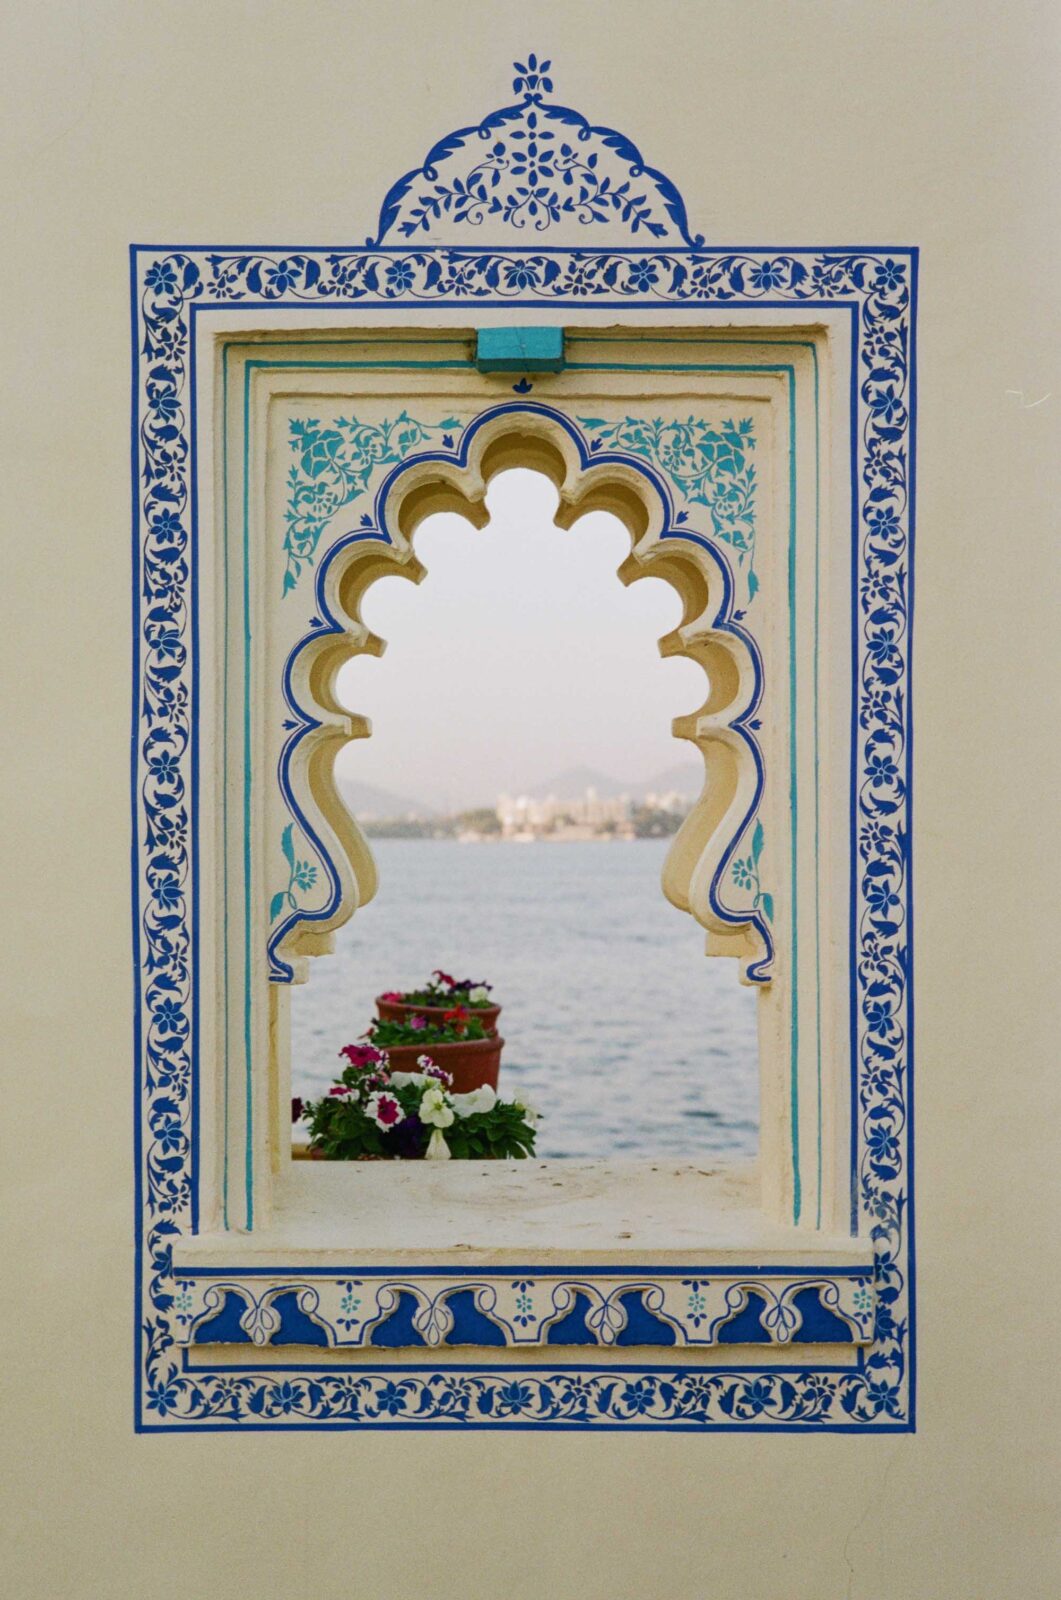 Udaipur Luxury Travel Guide | Rajasthan | India | Molly Carr Photography | Taj Lake Palace